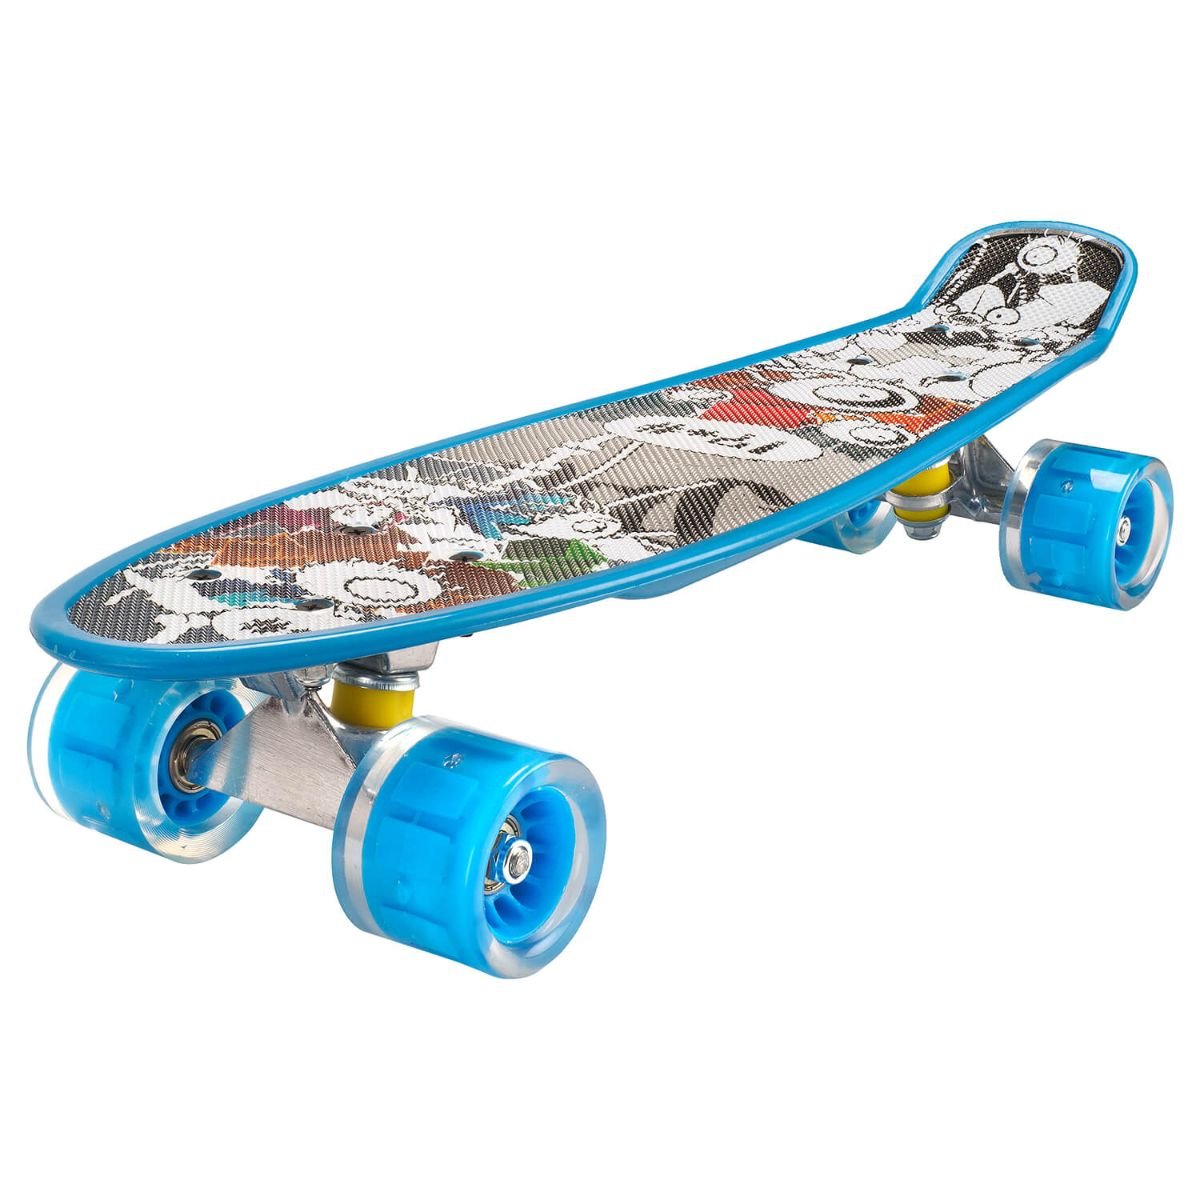 Penny board Action One, Cu roti luminoase, 22 cm, ABEC-7 PU, Aluminium Truck 90 kg, Sundry Role si skateboard imagine 2022